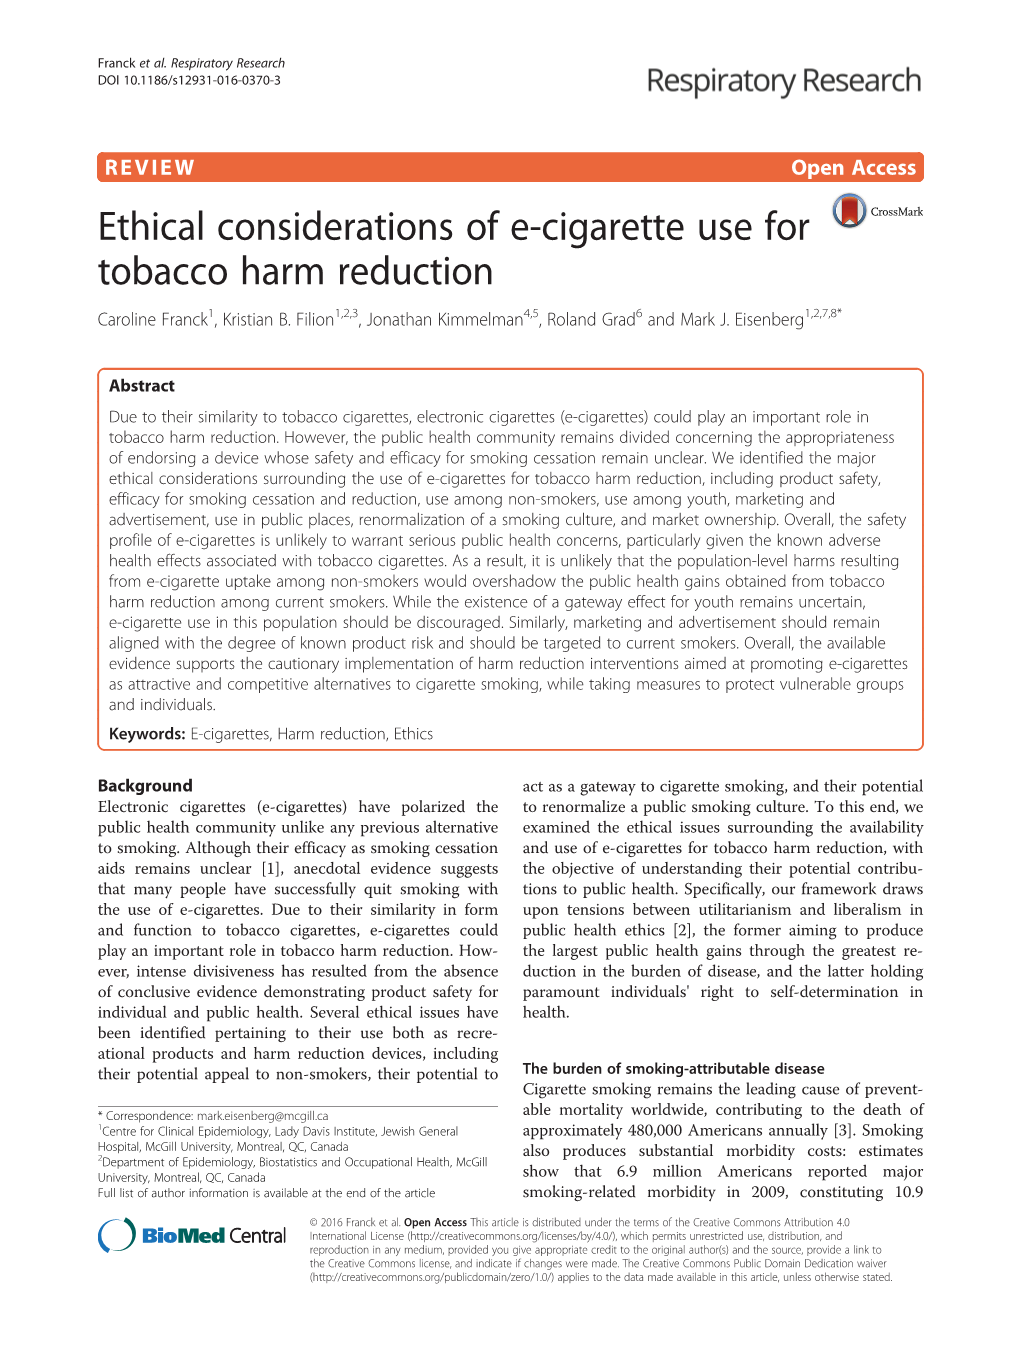 Ethical Considerations of E-Cigarette Use for Tobacco Harm Reduction Caroline Franck1, Kristian B